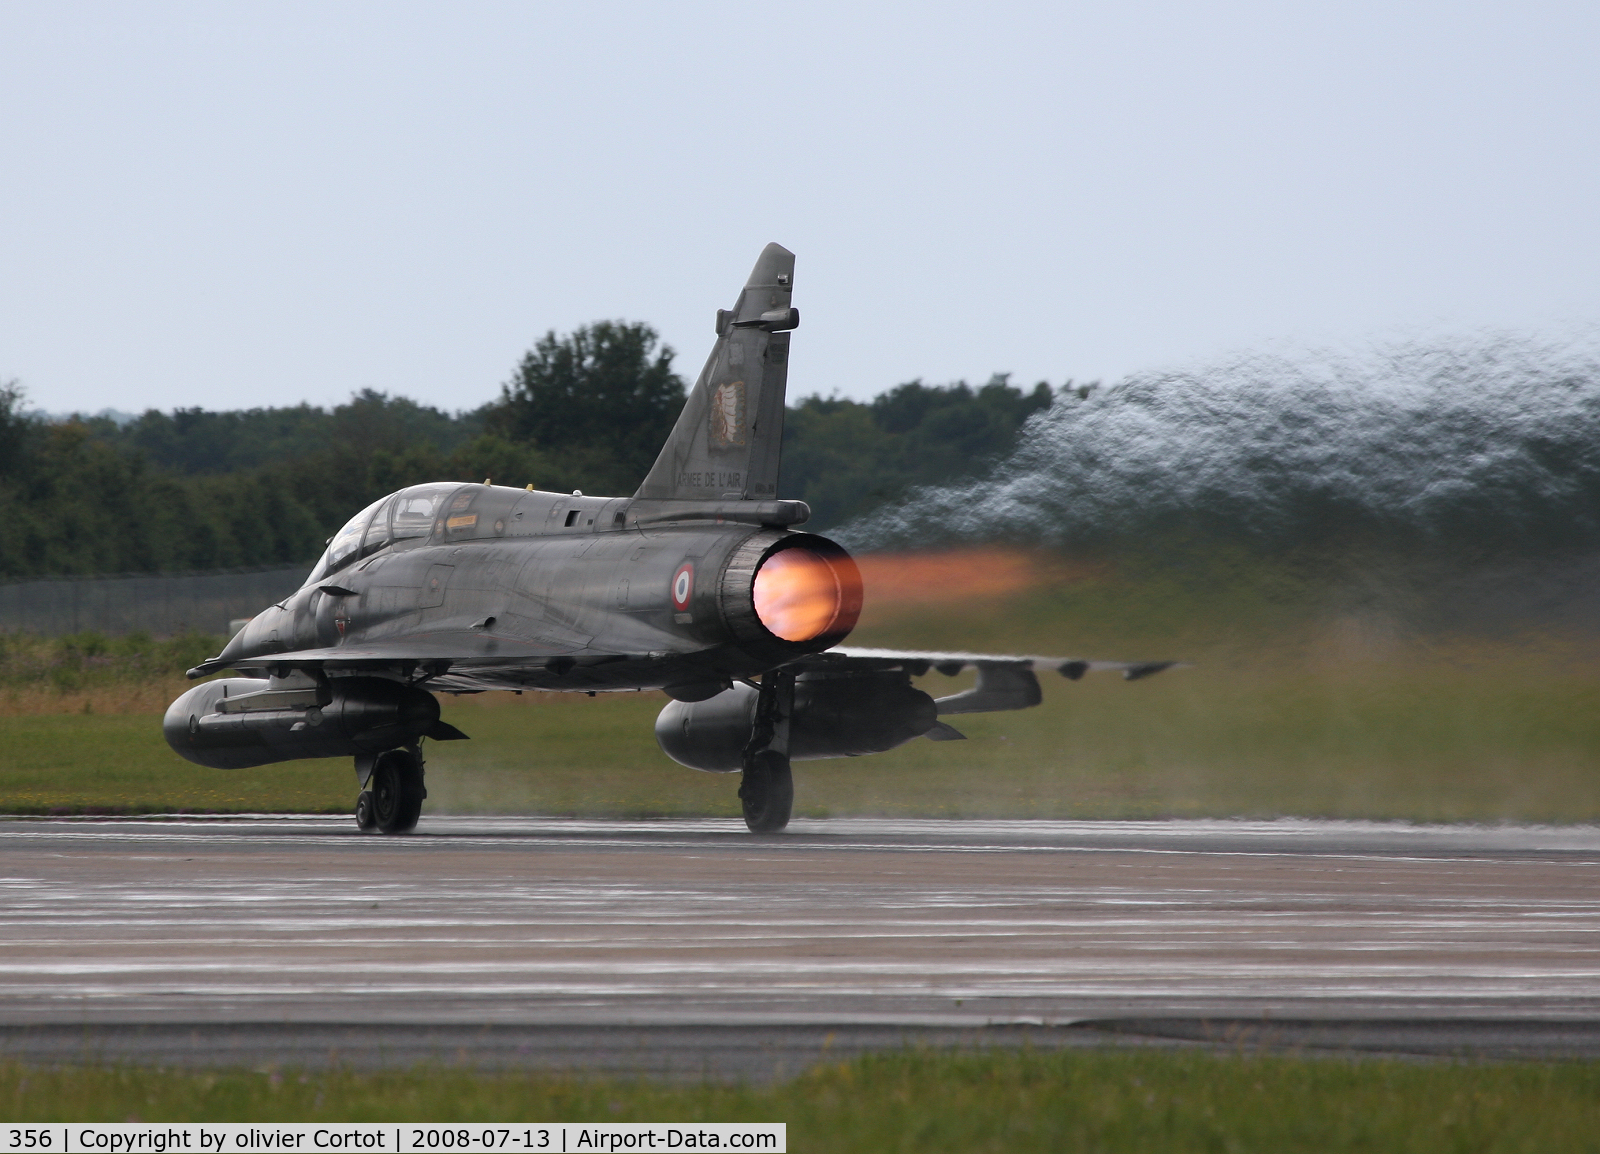 356, Dassault Mirage 2000N C/N 326, let's go ! Avord 2008